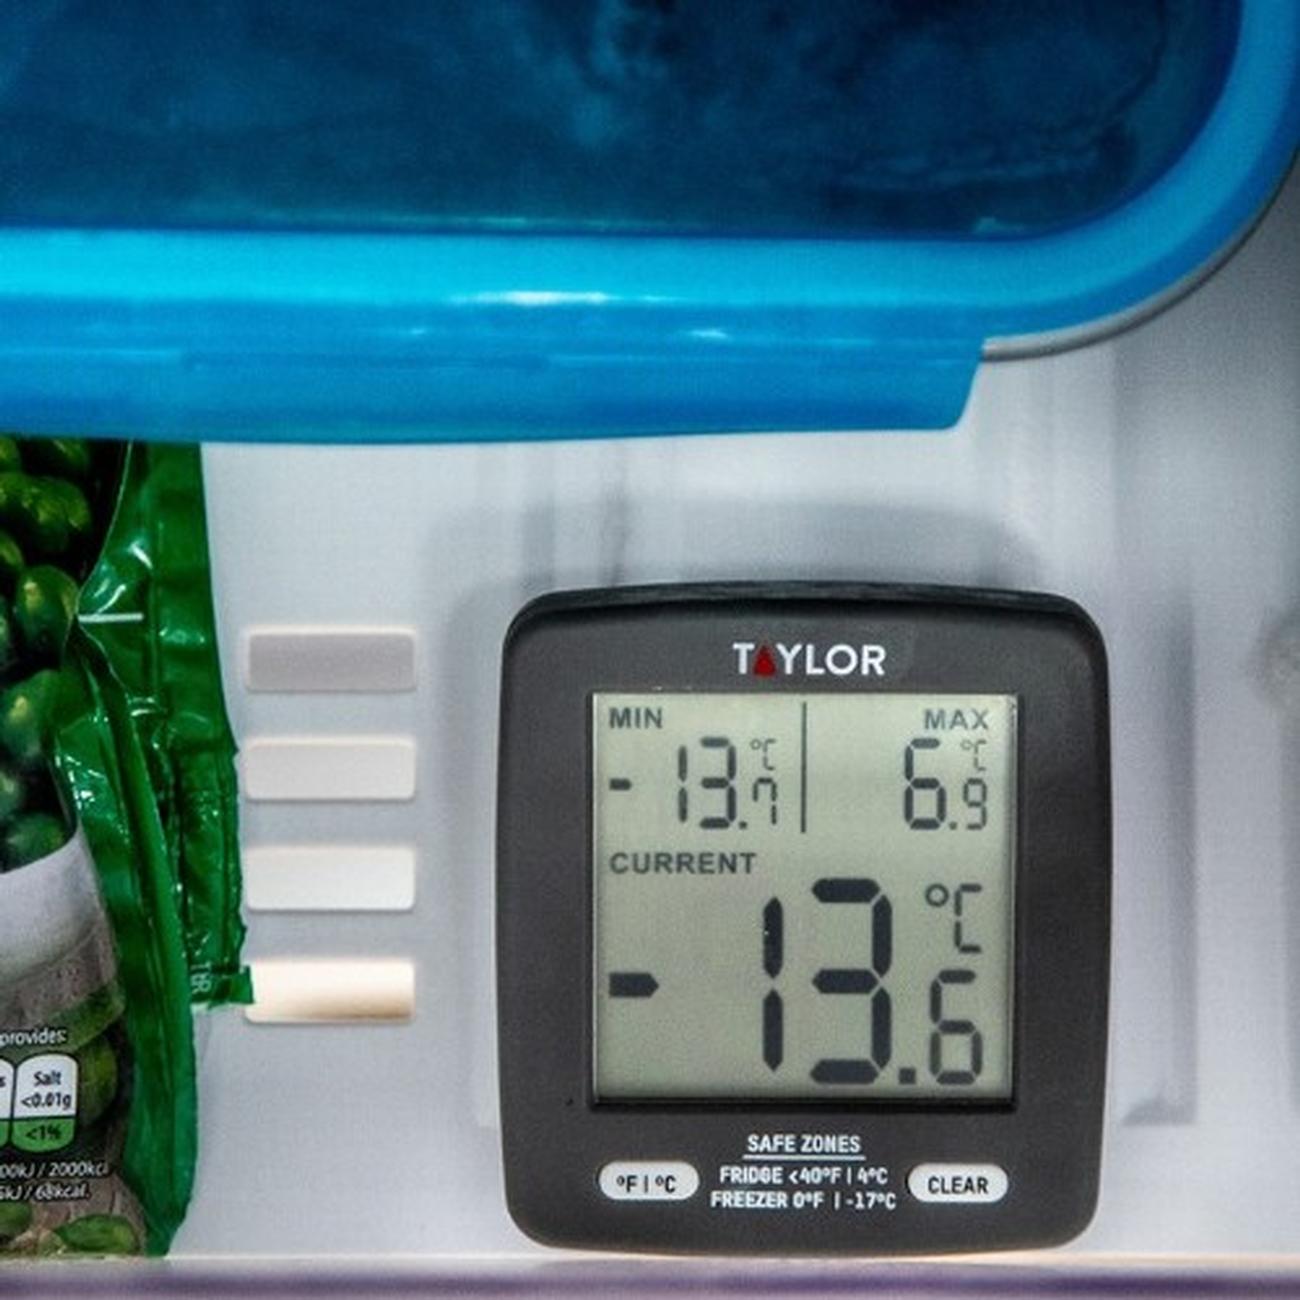 PRO Refrigerator / Freezer Thermometer